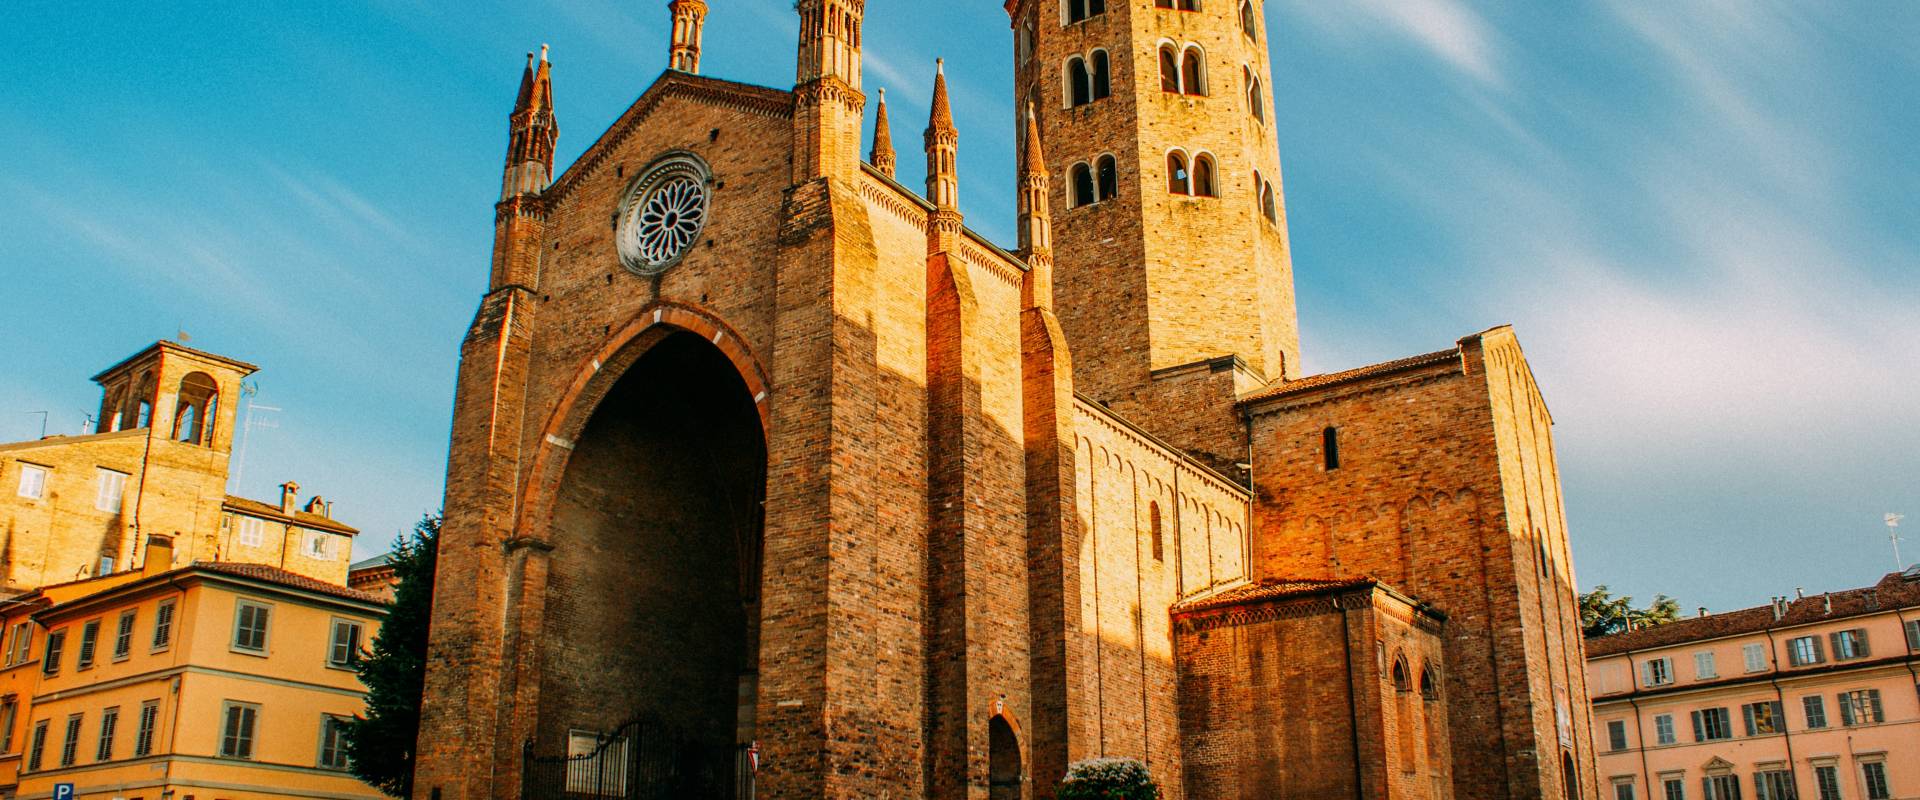 Basilica of Sant'Antonino photo by Albert Paci